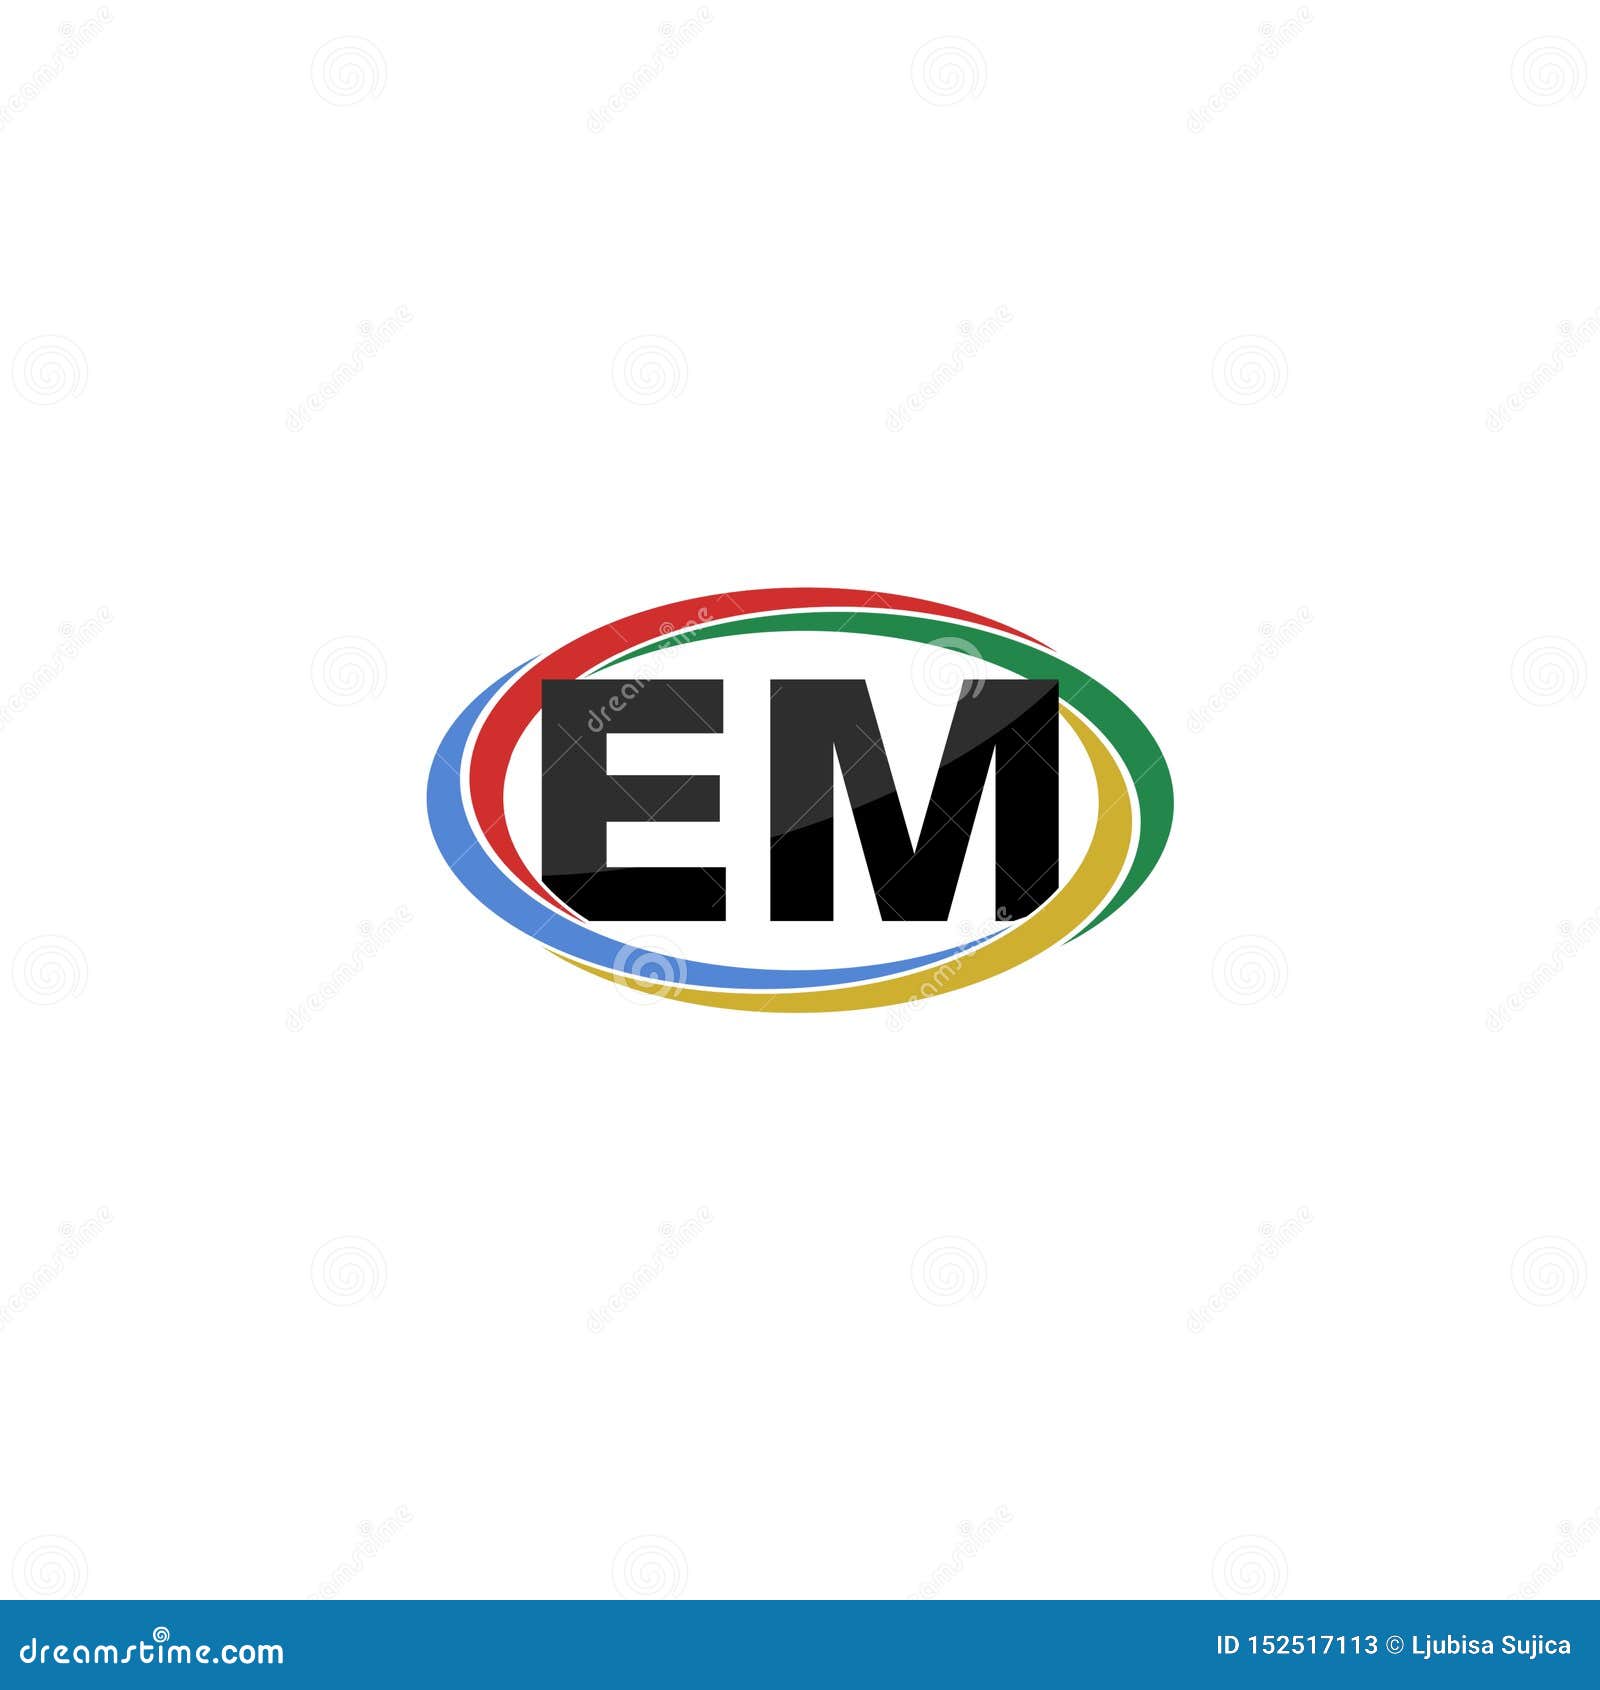 Modern, Professional, It Company Logo Design for EM by V Solutions | Design  #18370848